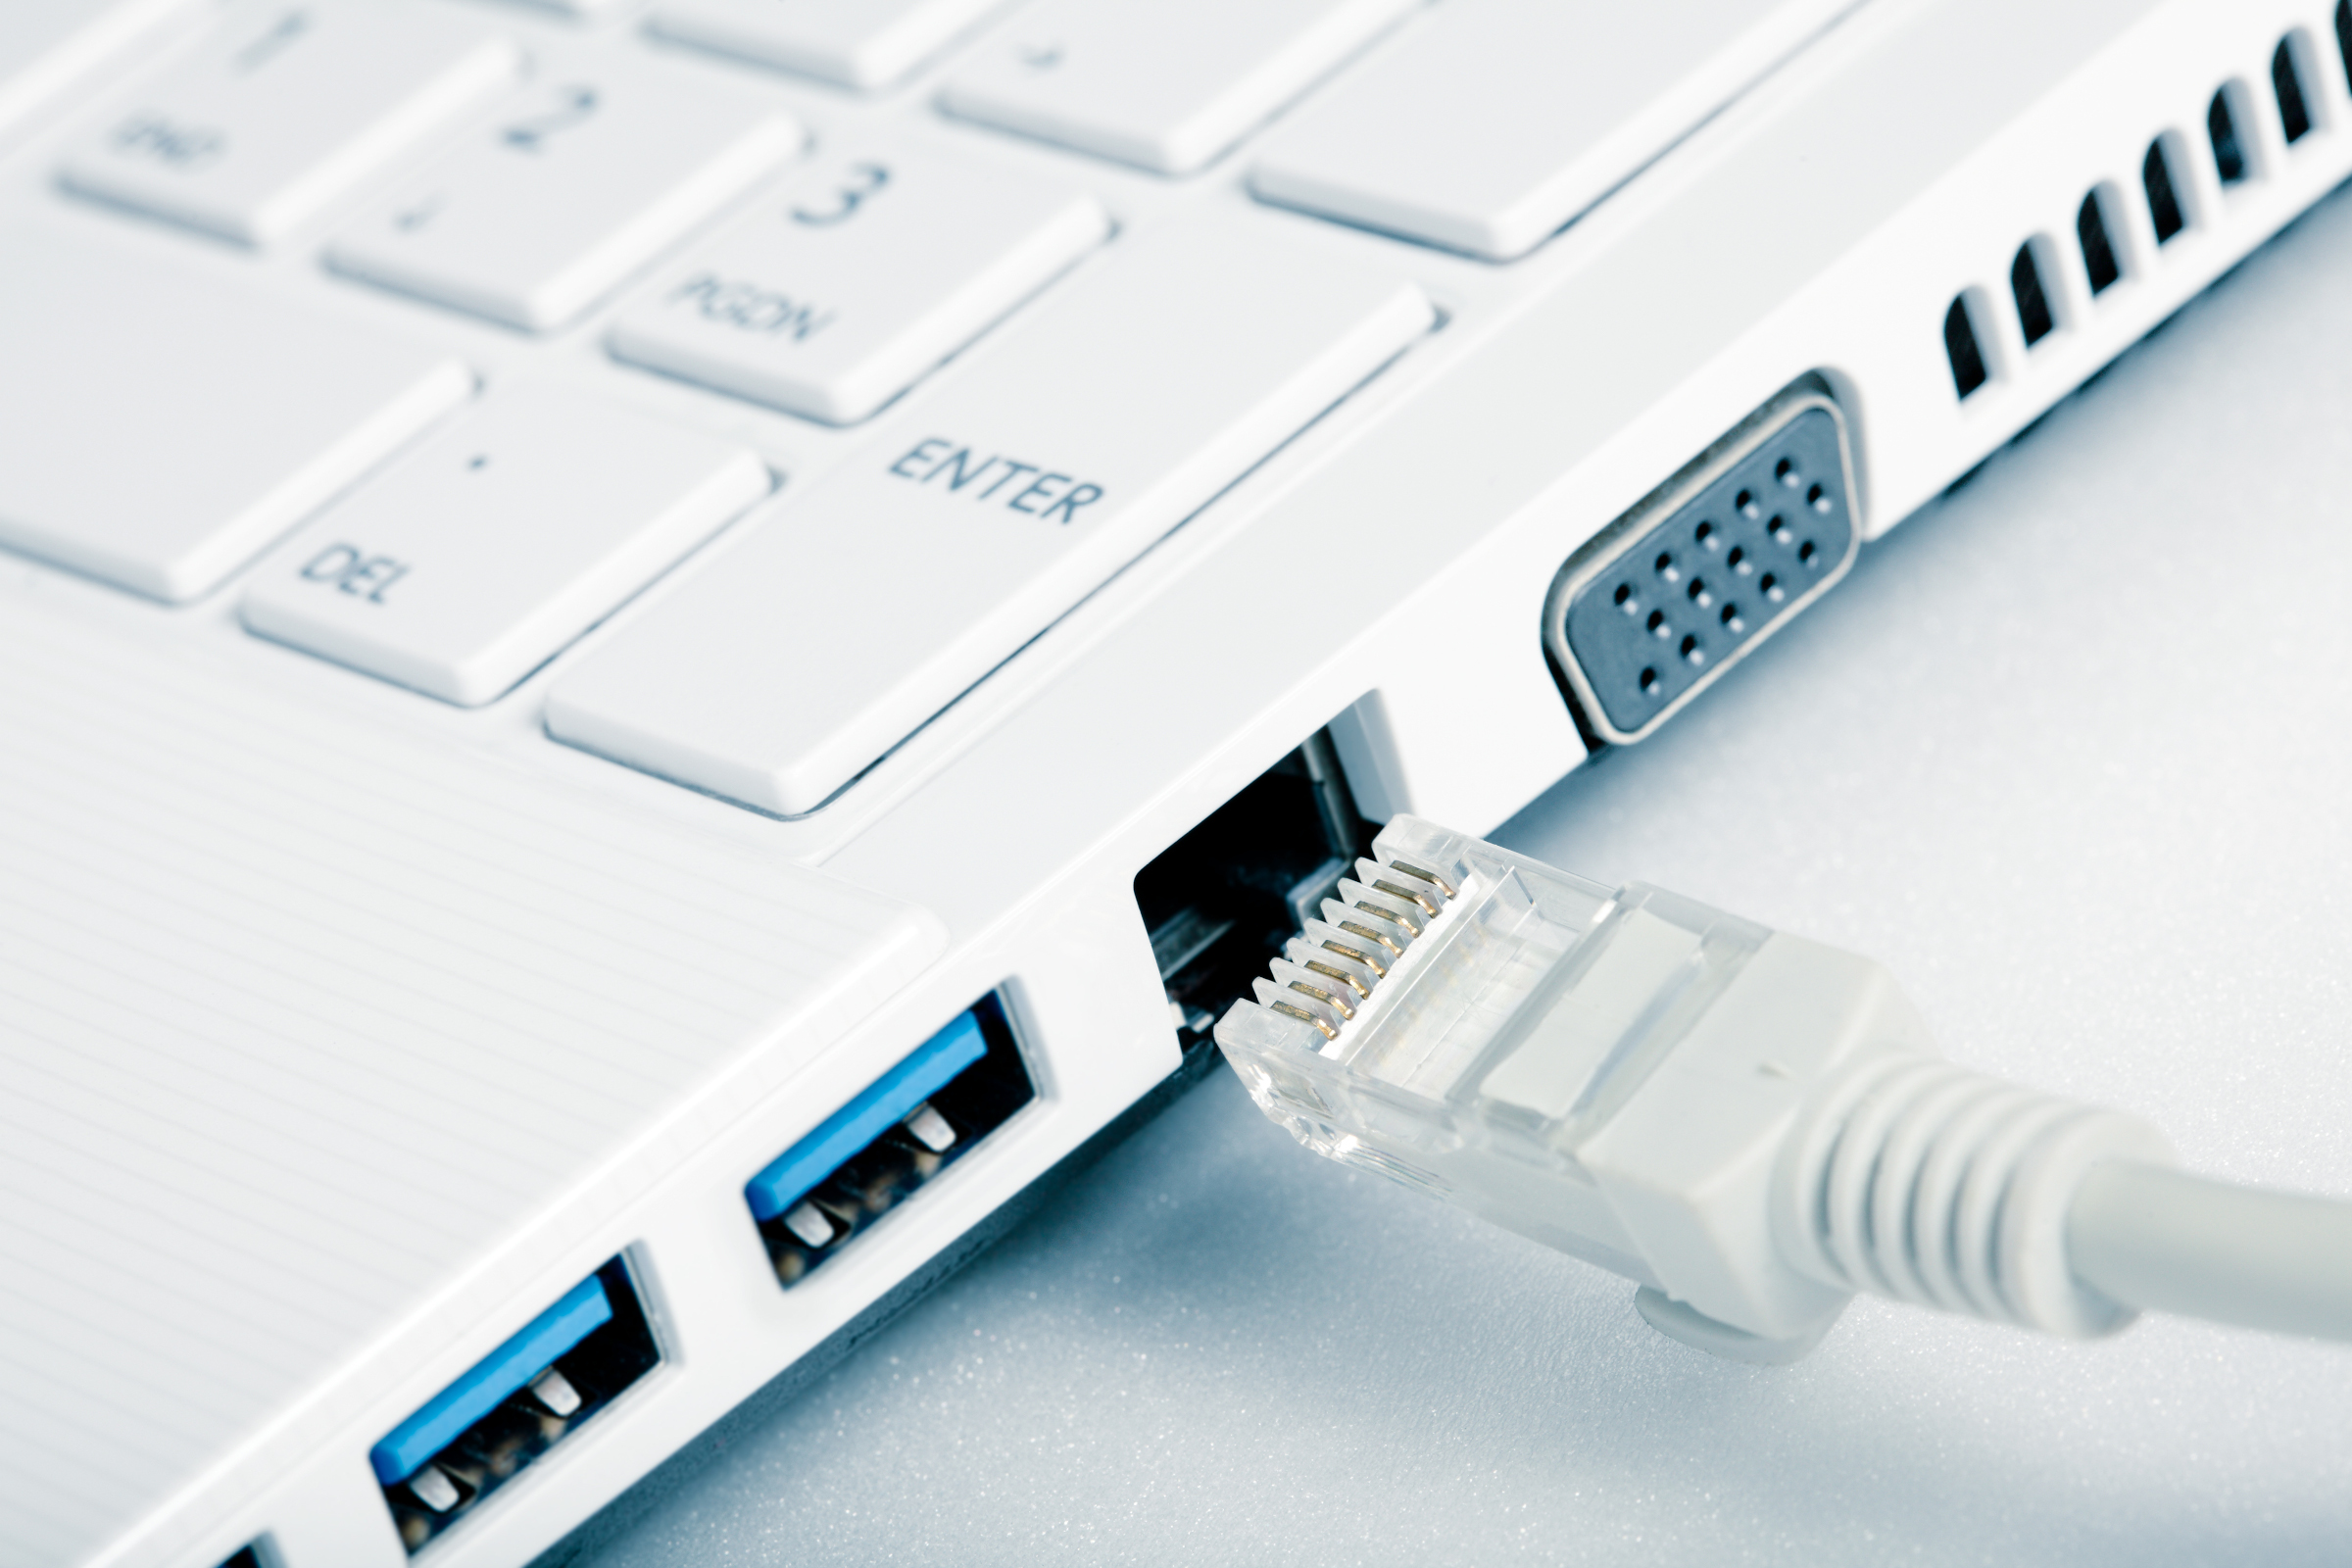 Aguanieve capitalismo Joven Cómo elegir el mejor cable de Ethernet para tu router doméstico | Computer  Hoy